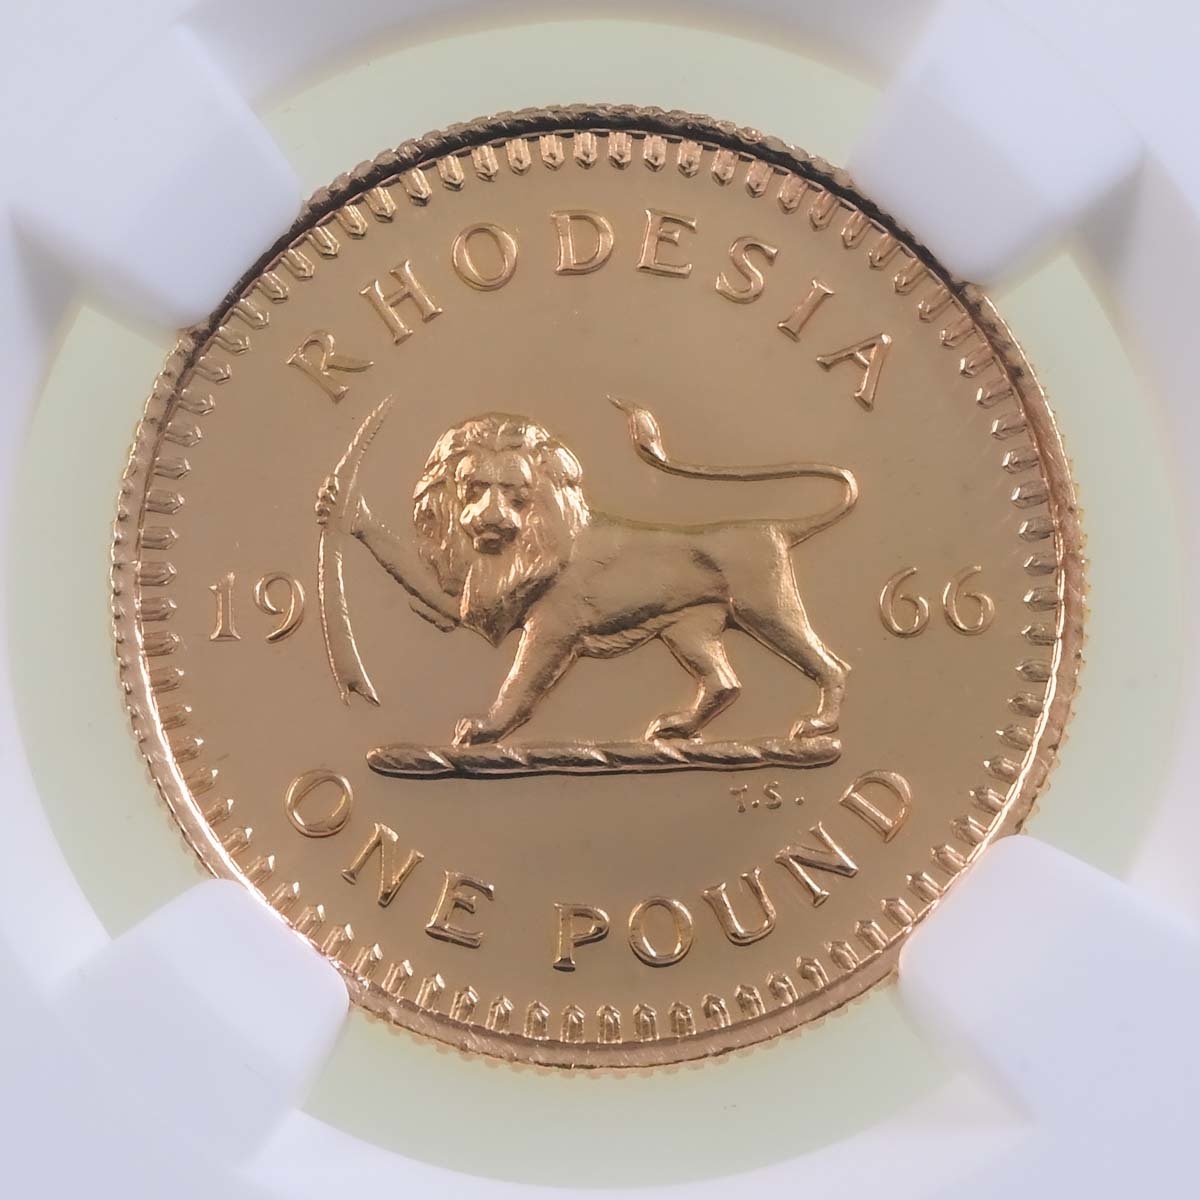 1966 Rhodesia Gold £1 PF 67 Ultra Cameo Reverse